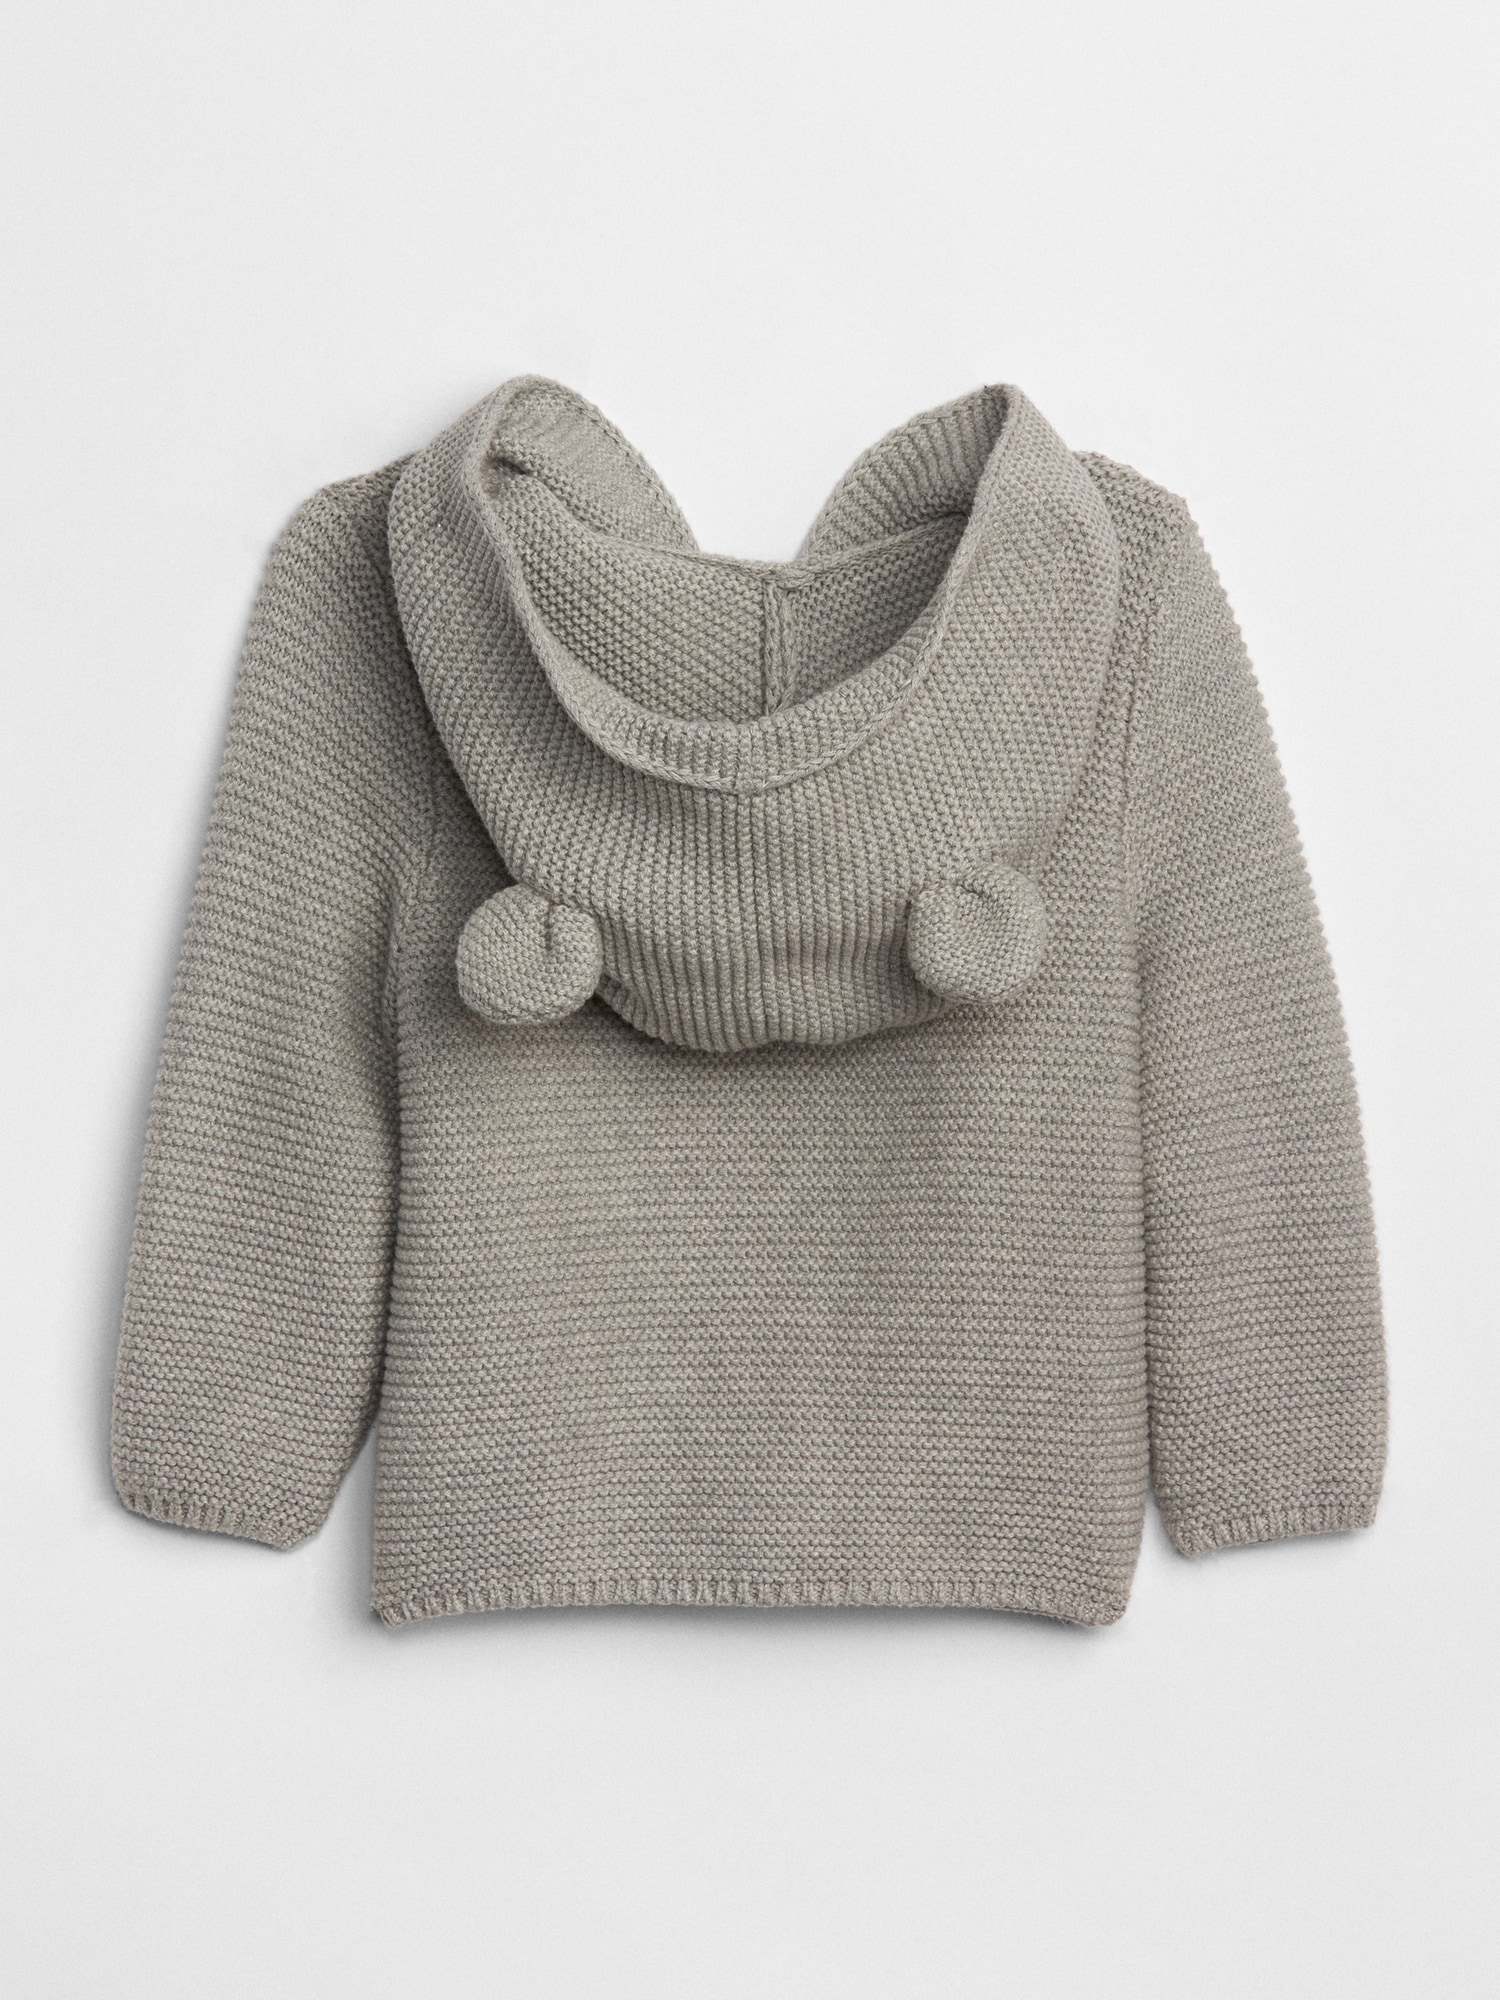 Baby Brannan Bear Sweater | Gap